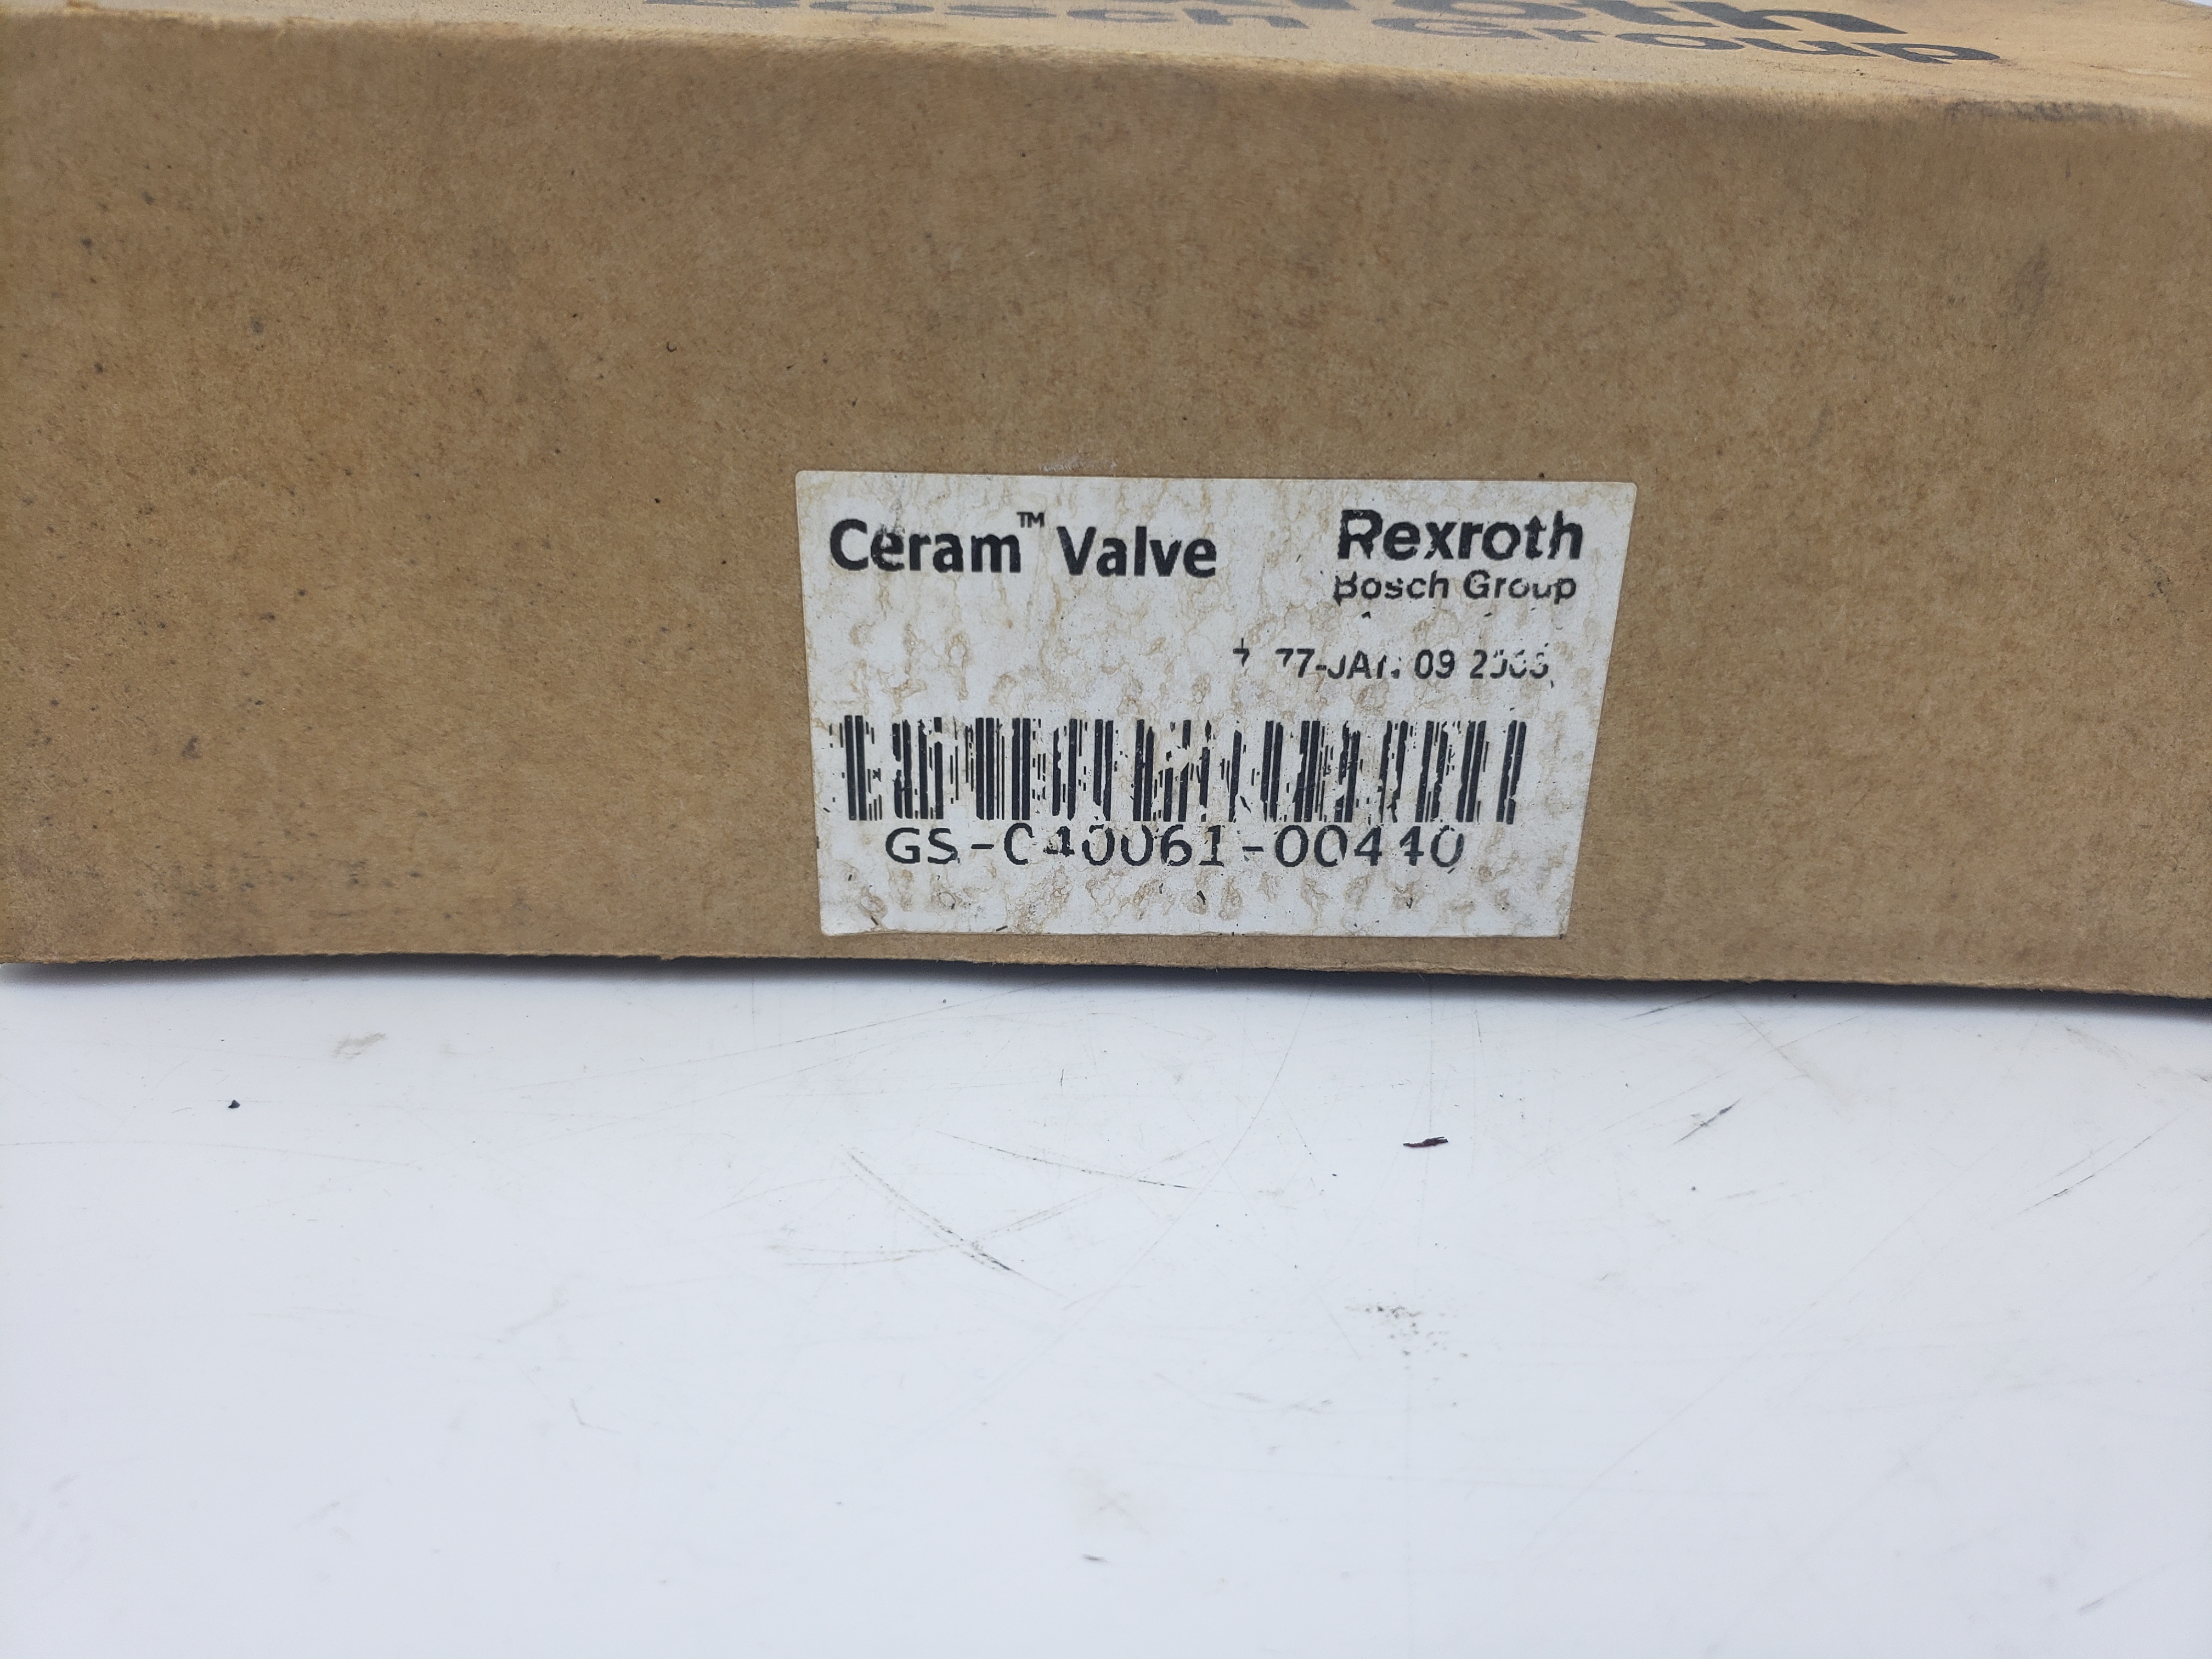 Rexroth Ceram Valve GS-040061-00440